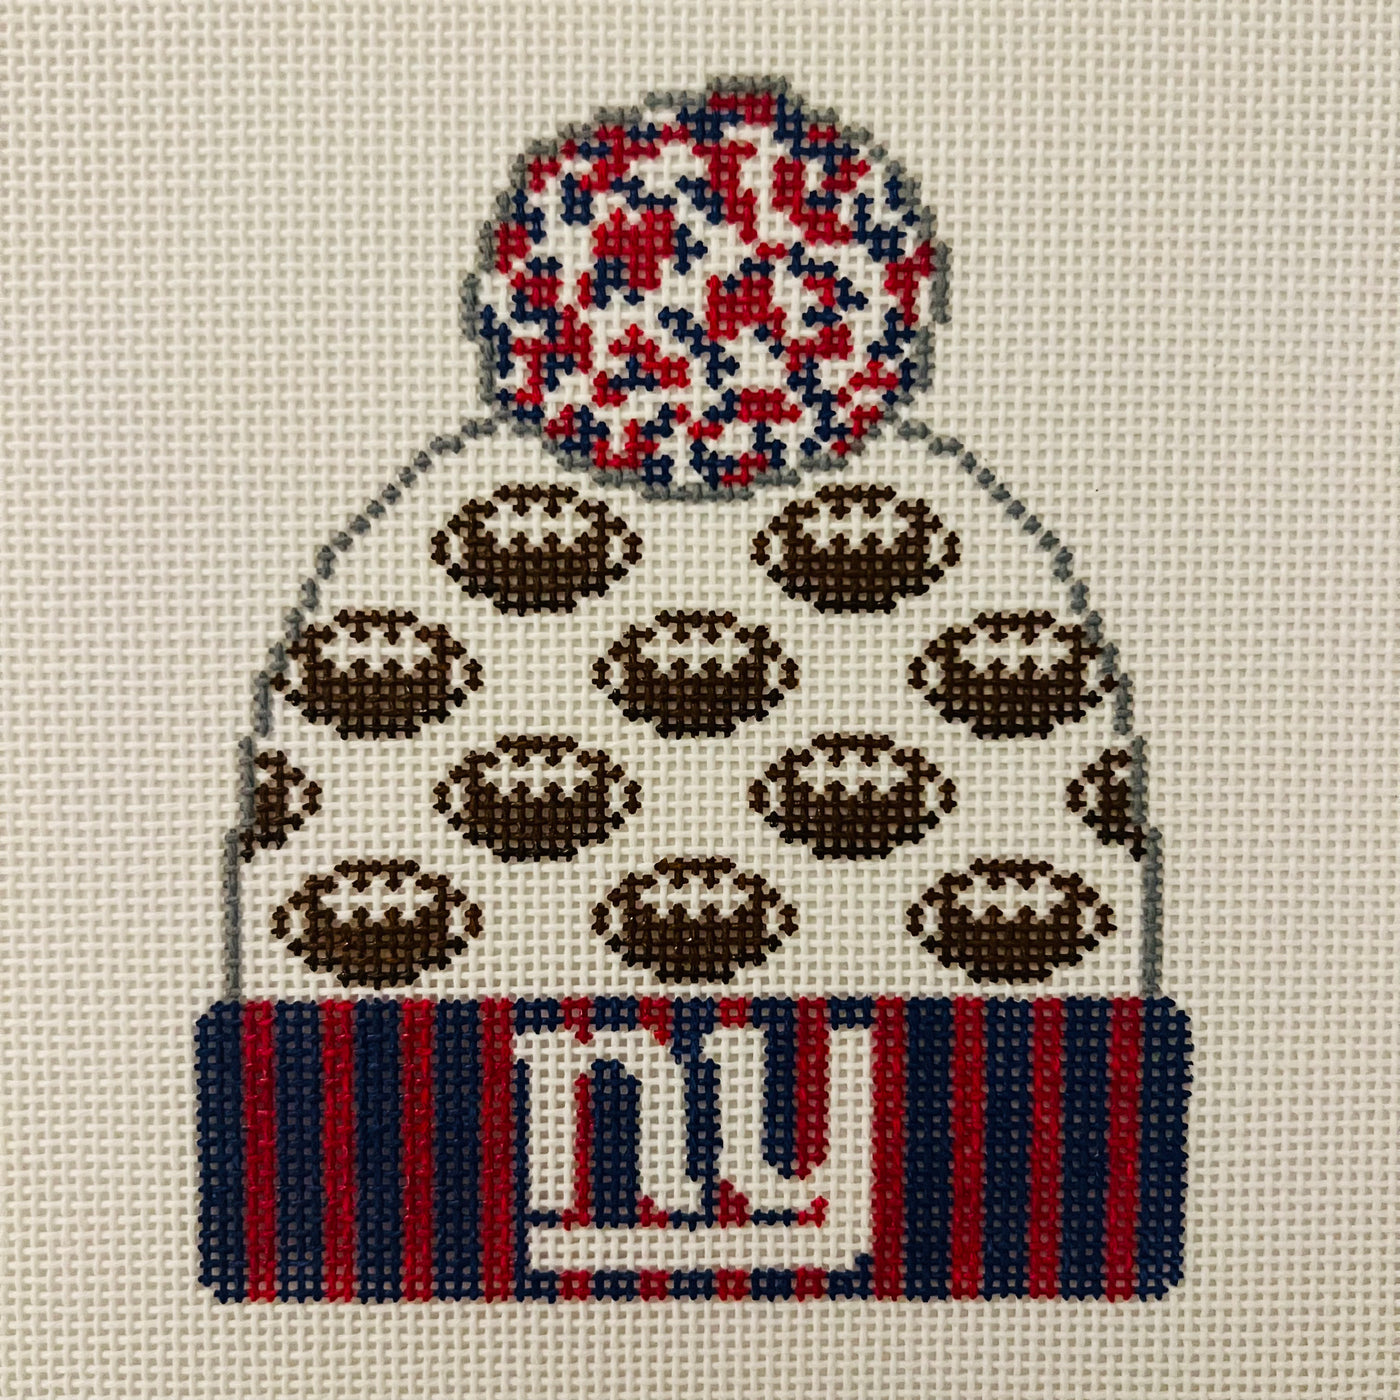 Beanie - New York Giants Football Needlepoint Canvas